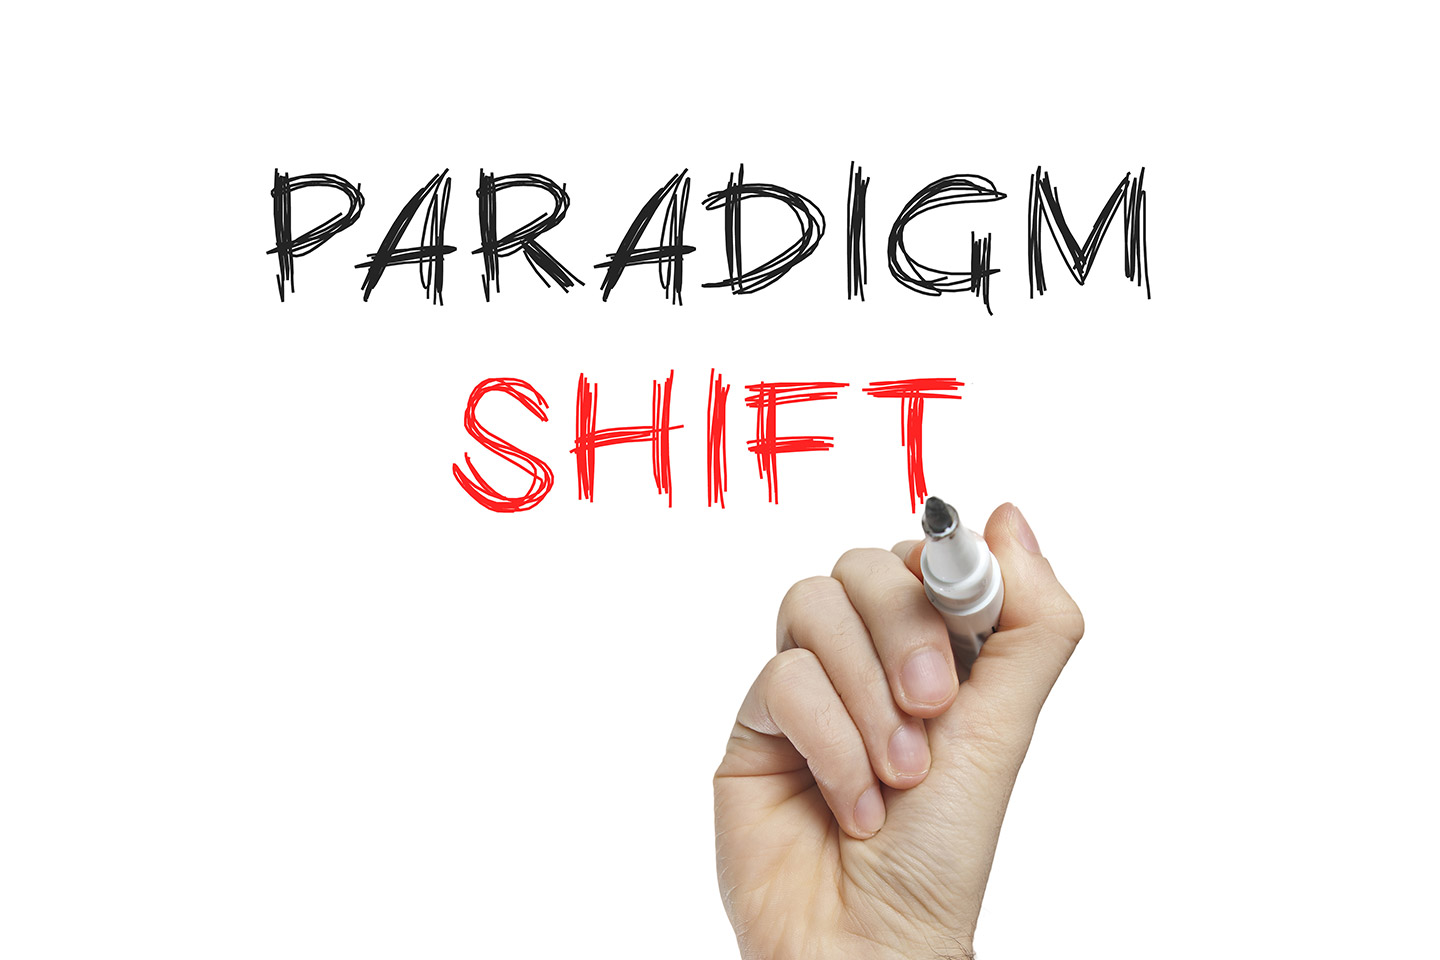 paradigm shift central